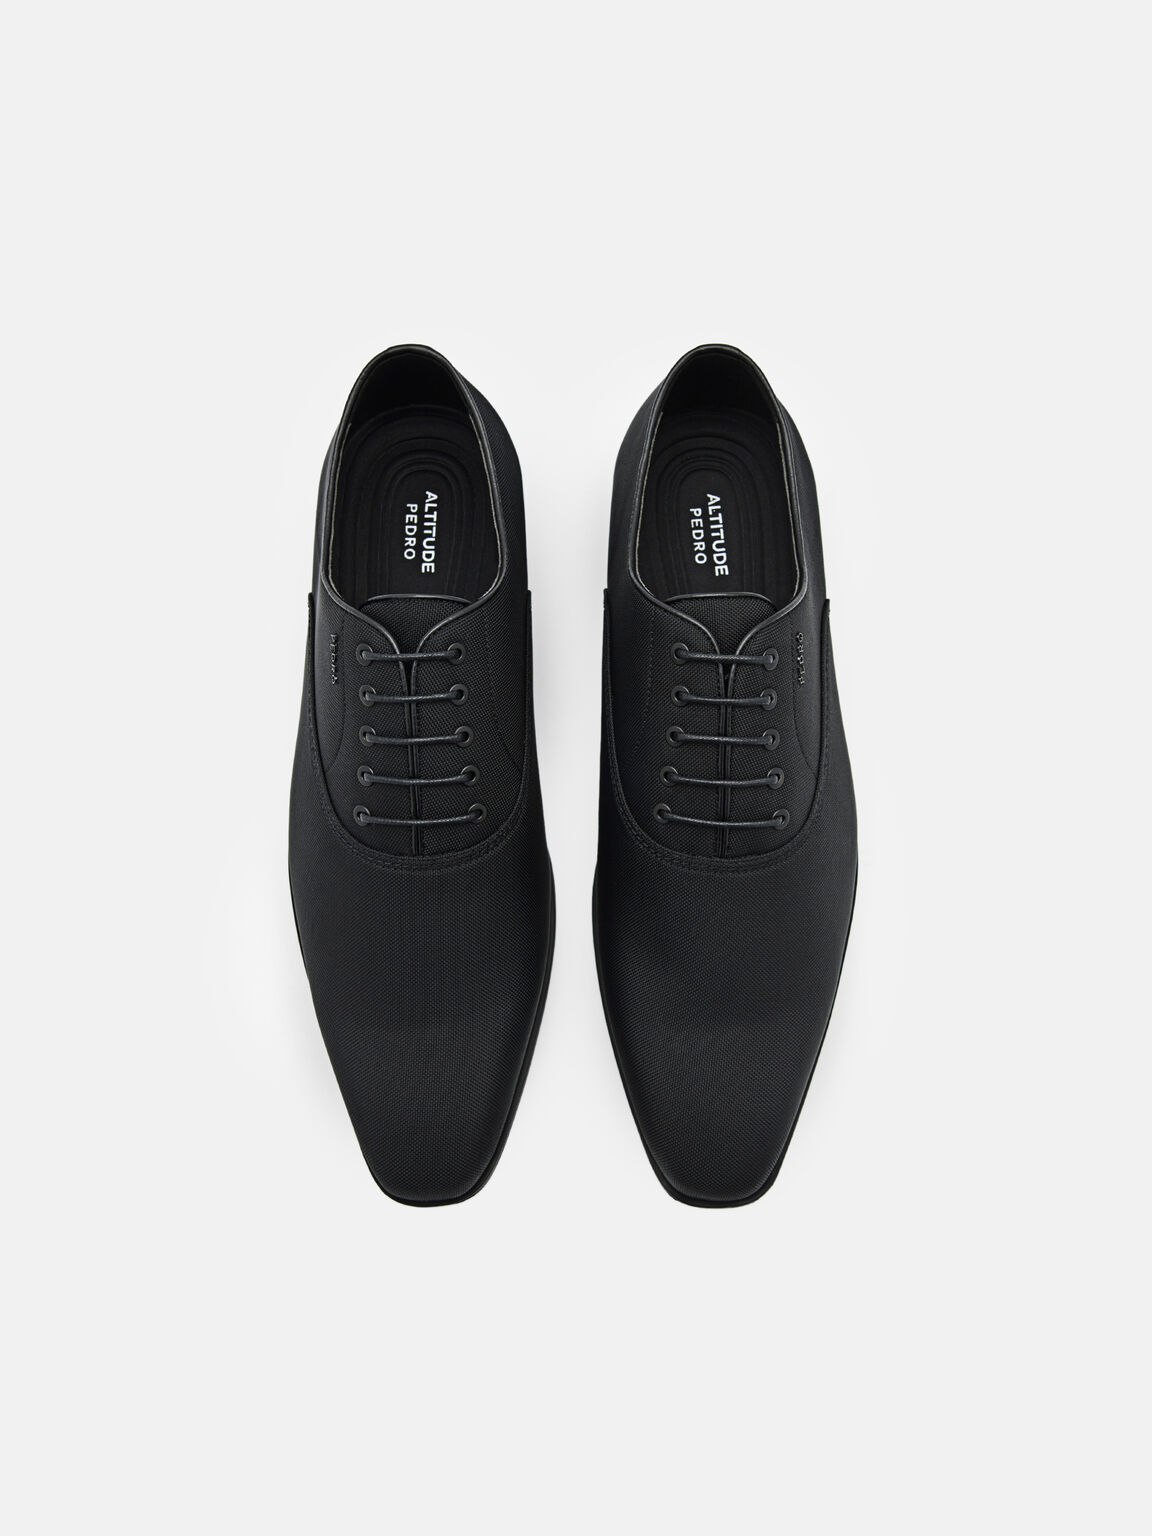 Altitude Lightweight Nylon Oxford Shoes, Black